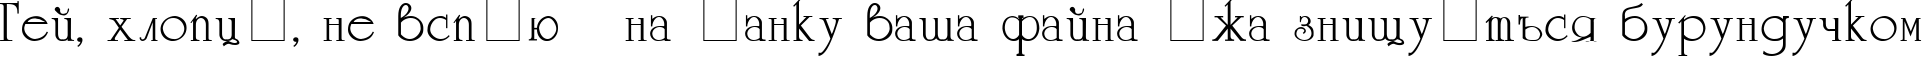 Пример написания шрифтом UniversityC текста на украинском